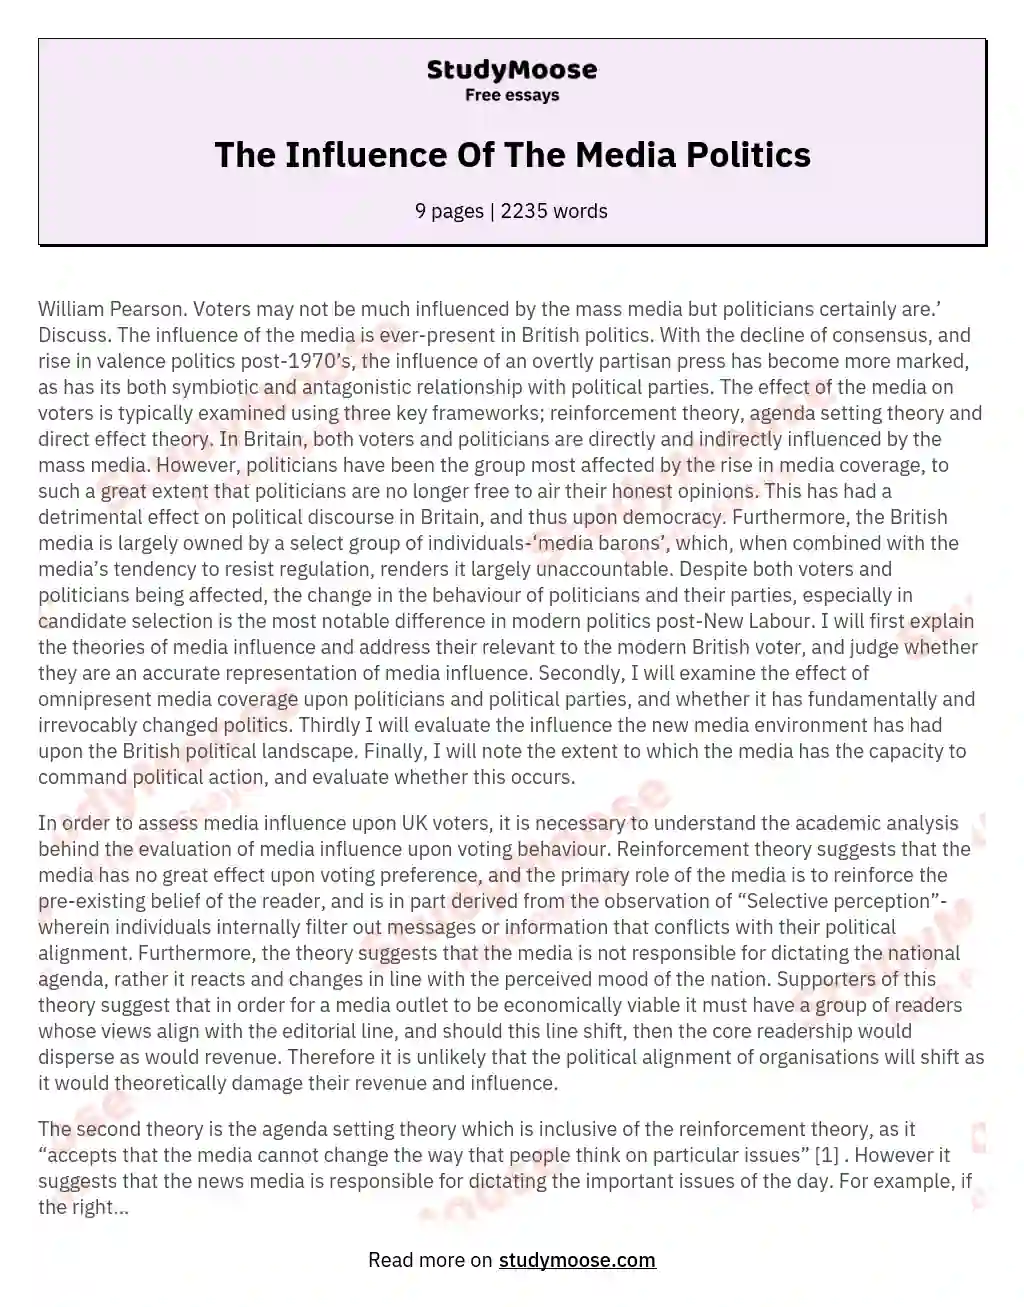 The Influence Of The Media Politics essay